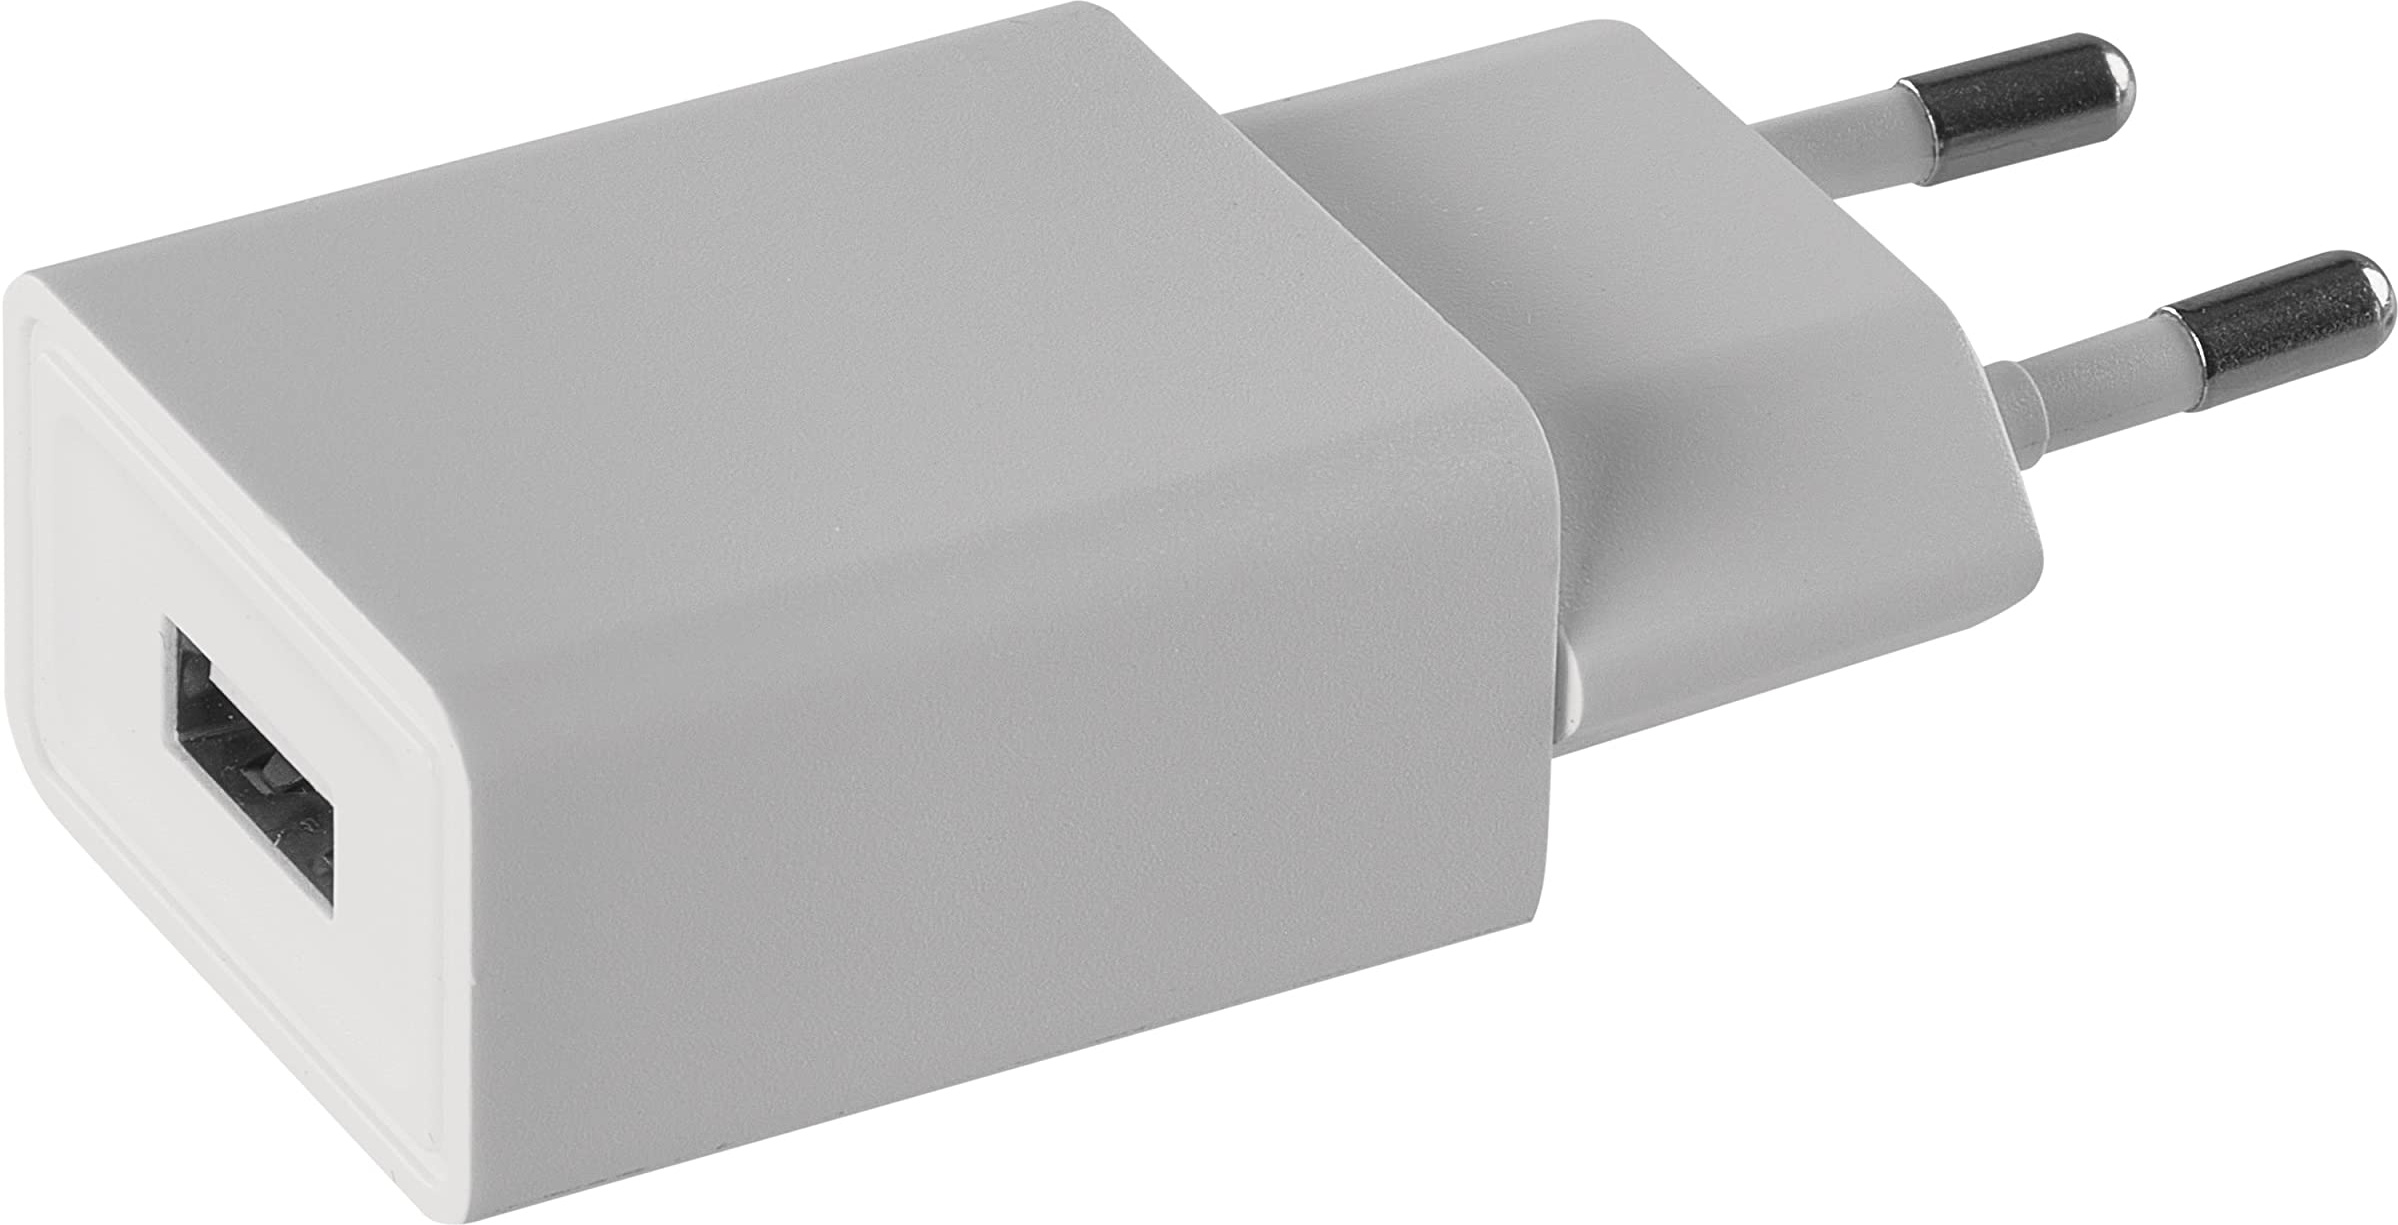 EMOS USB-Ladegerät/Ladeadapter mit 1 Ausgang, USB-Netzteil Basic mit 1A Ausgangsstrom für Handy, Smartphone, Tablet, eBook Reader, Kamera, MP3-Player, Weiß, V0122